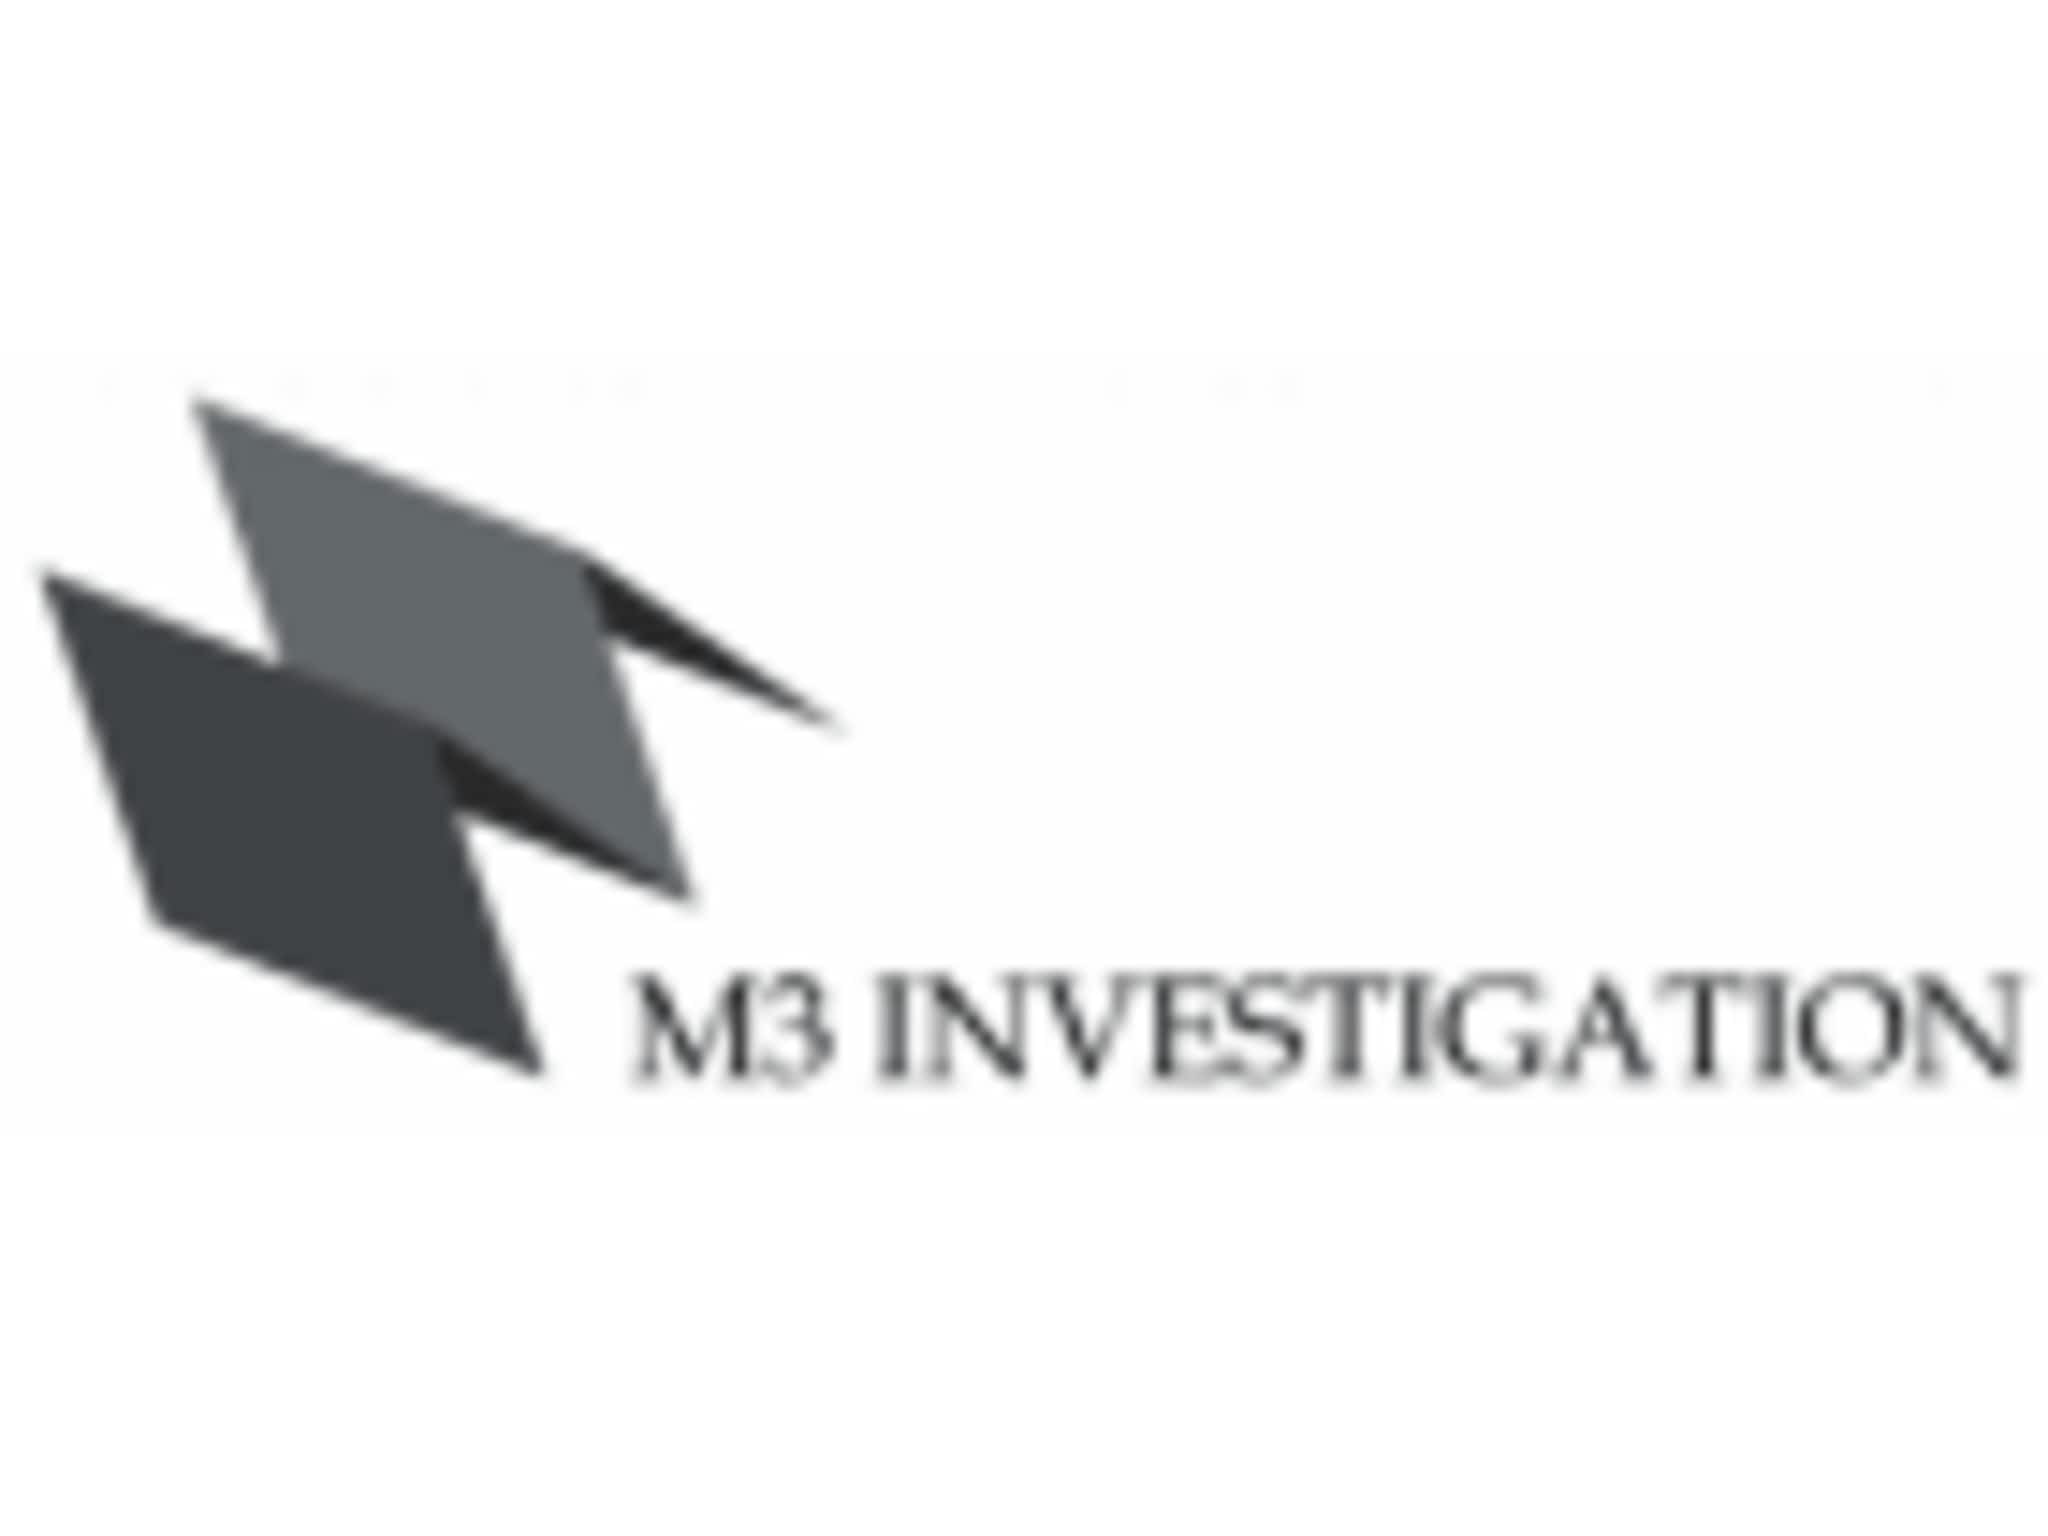 photo M3 Investigation Inc